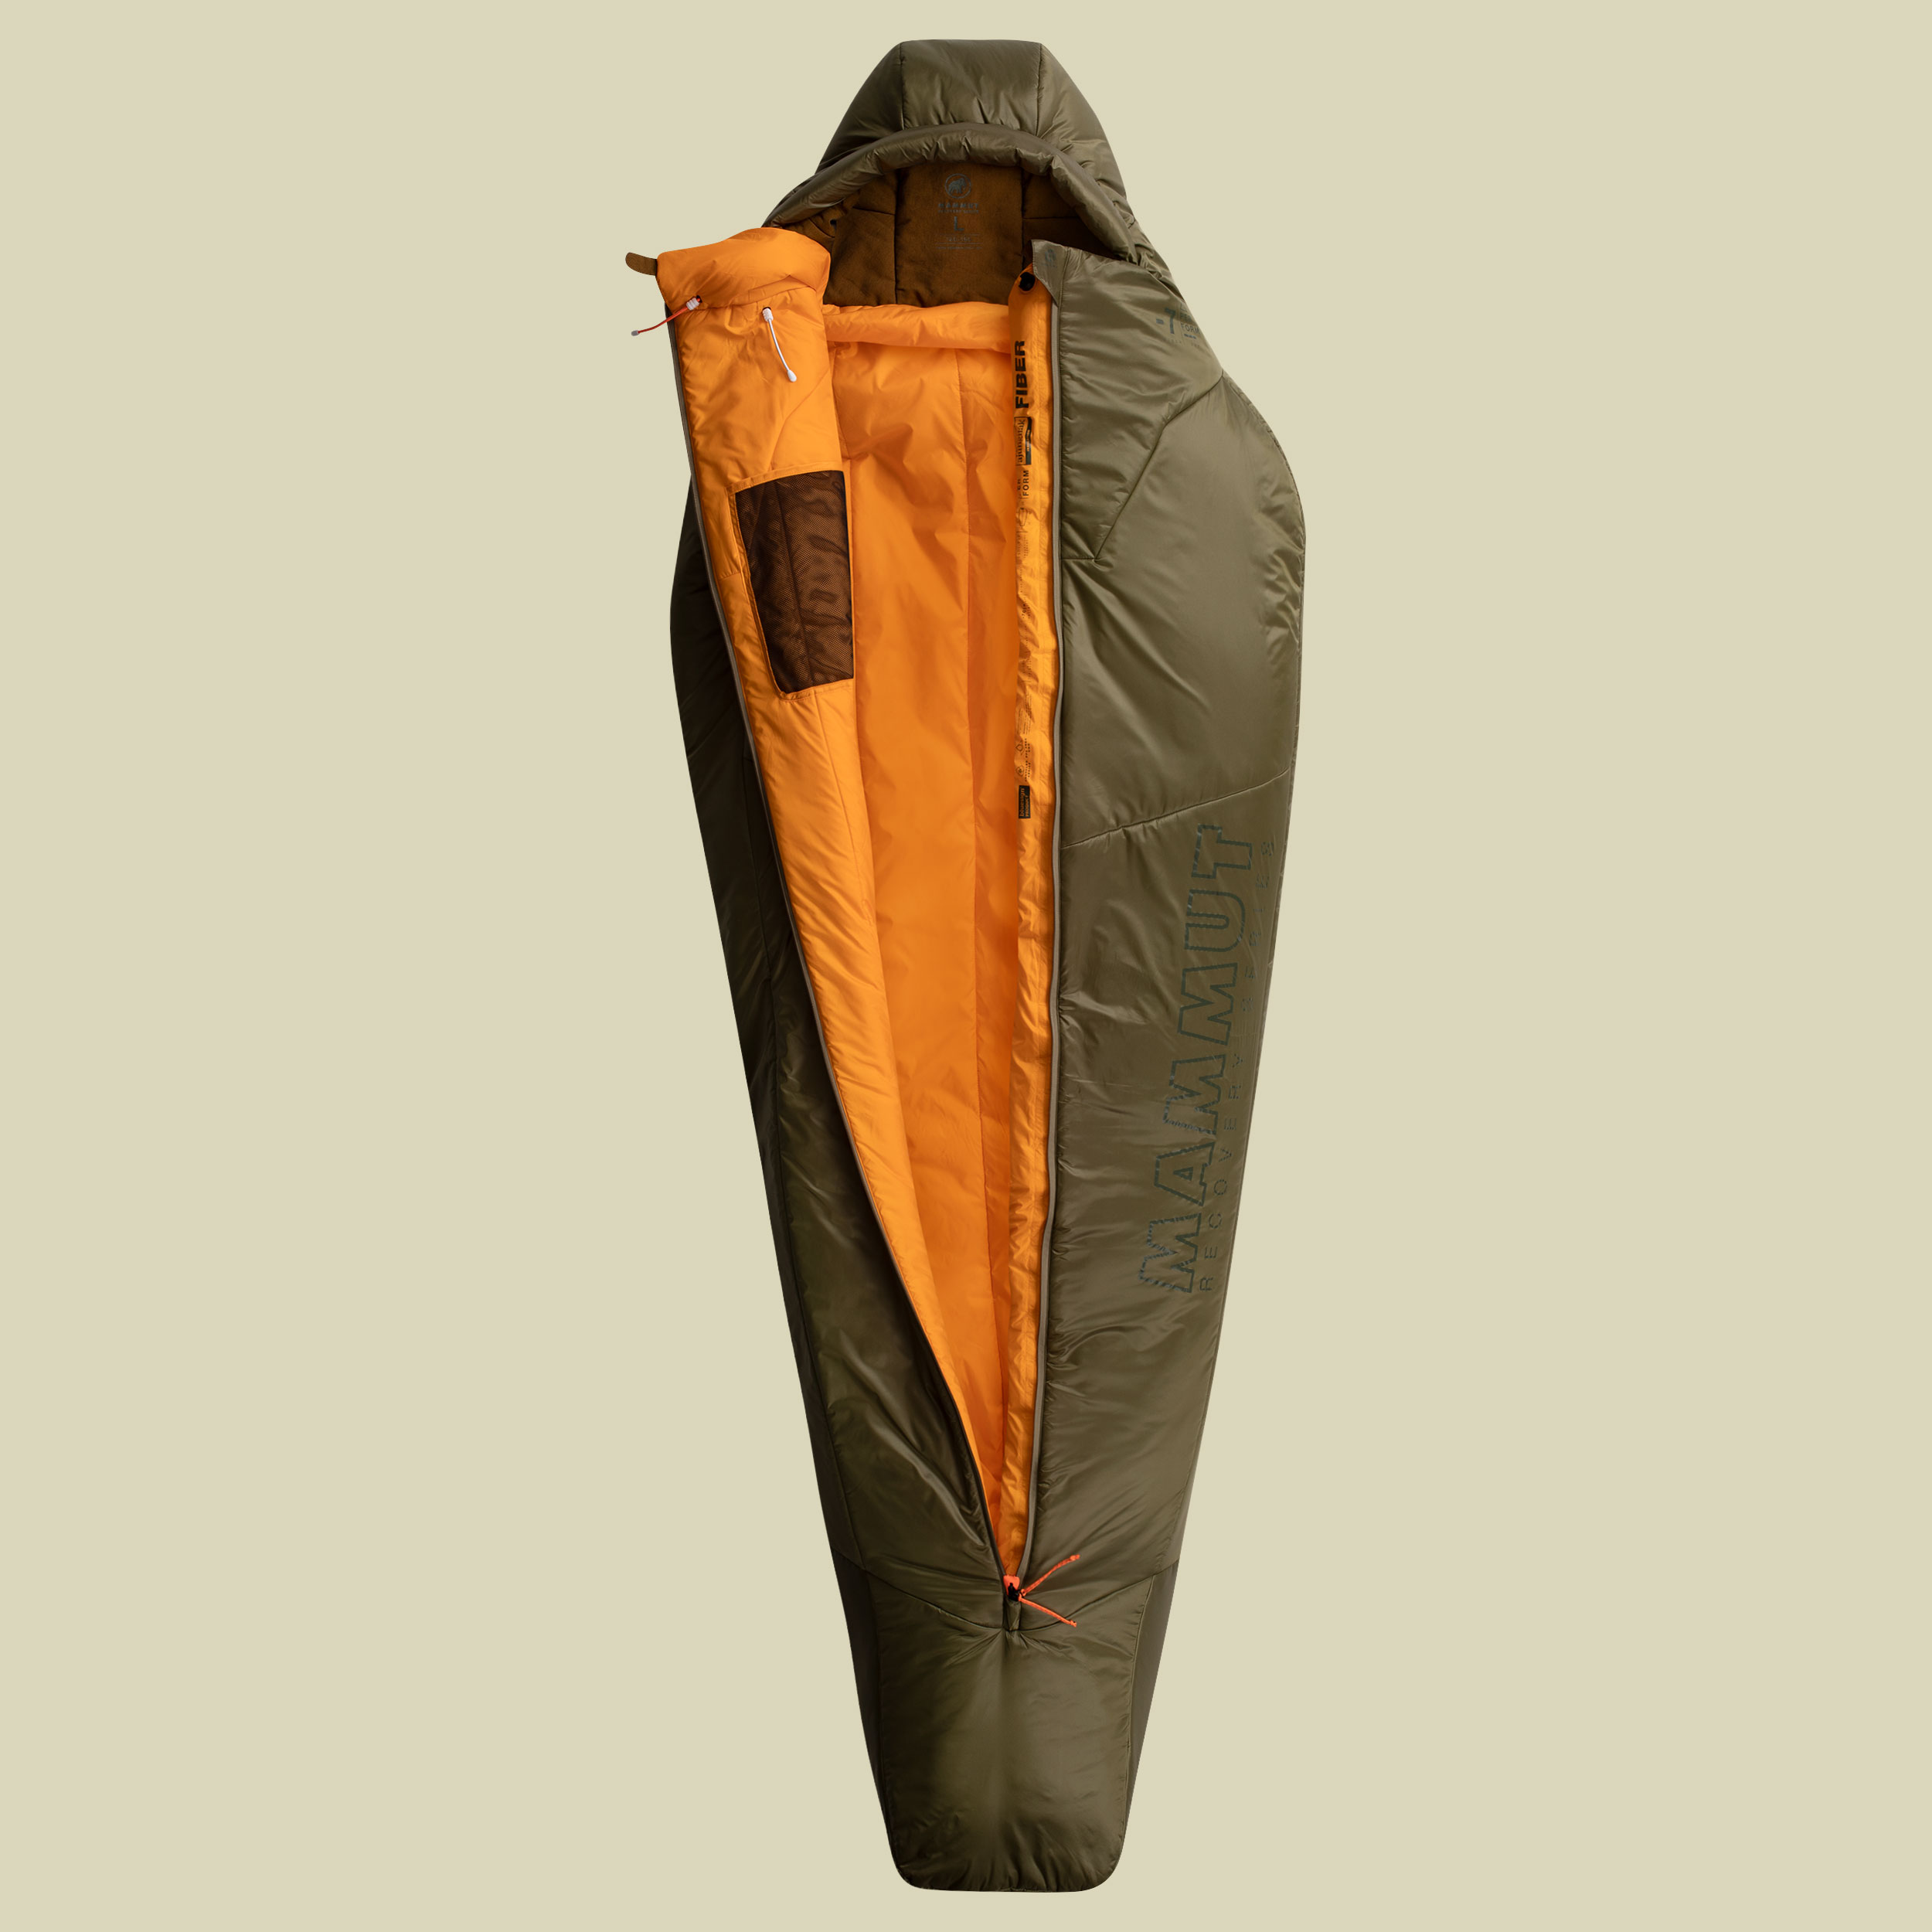 Perform Fiber Bag -7C bis Körpergröße 215 cm (XL) Farbe olive, Reißverschluss Mitte